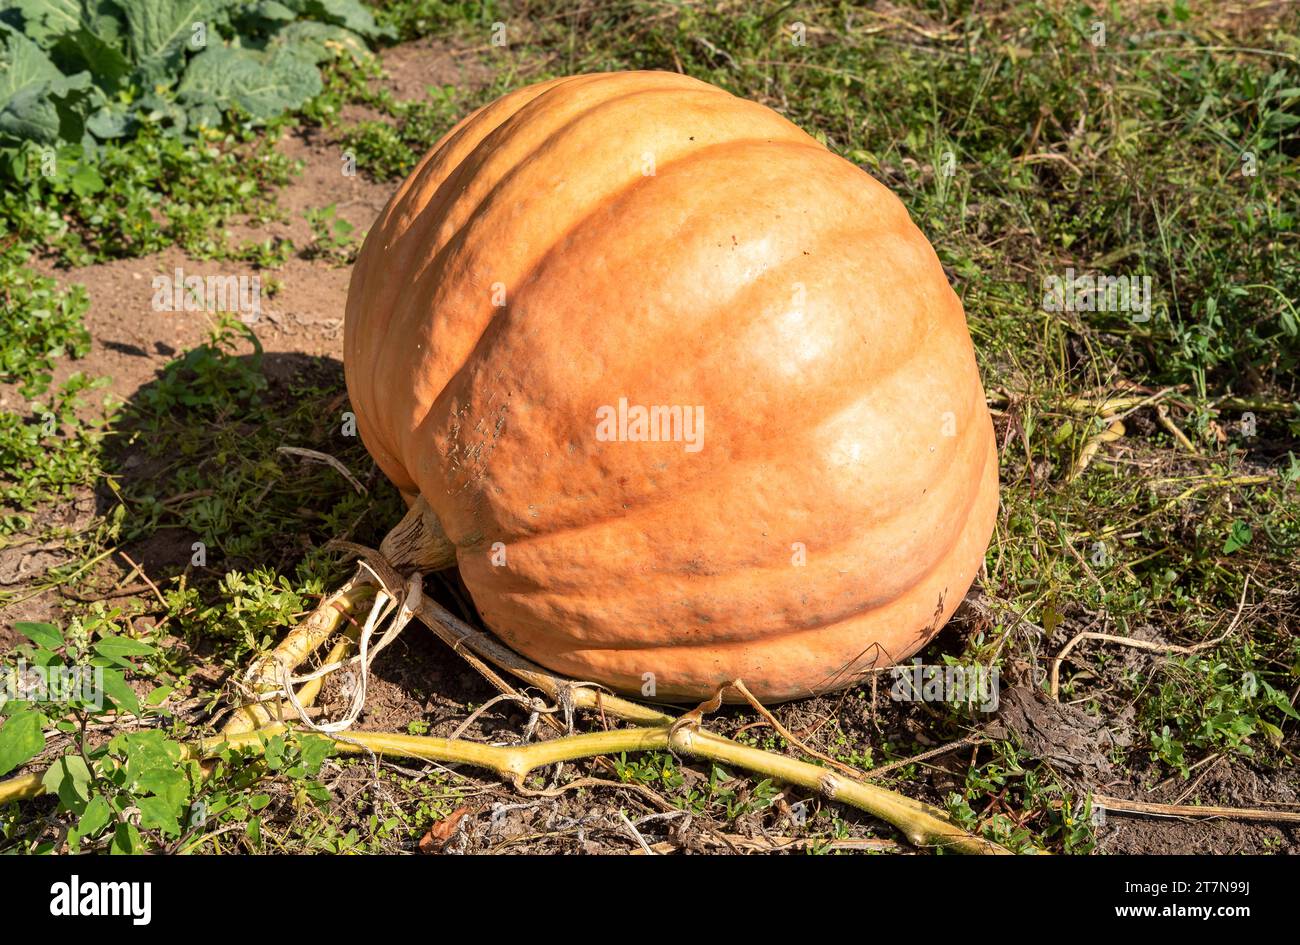 Big Orange pumpkin in the garden on the soil. Stock Photo